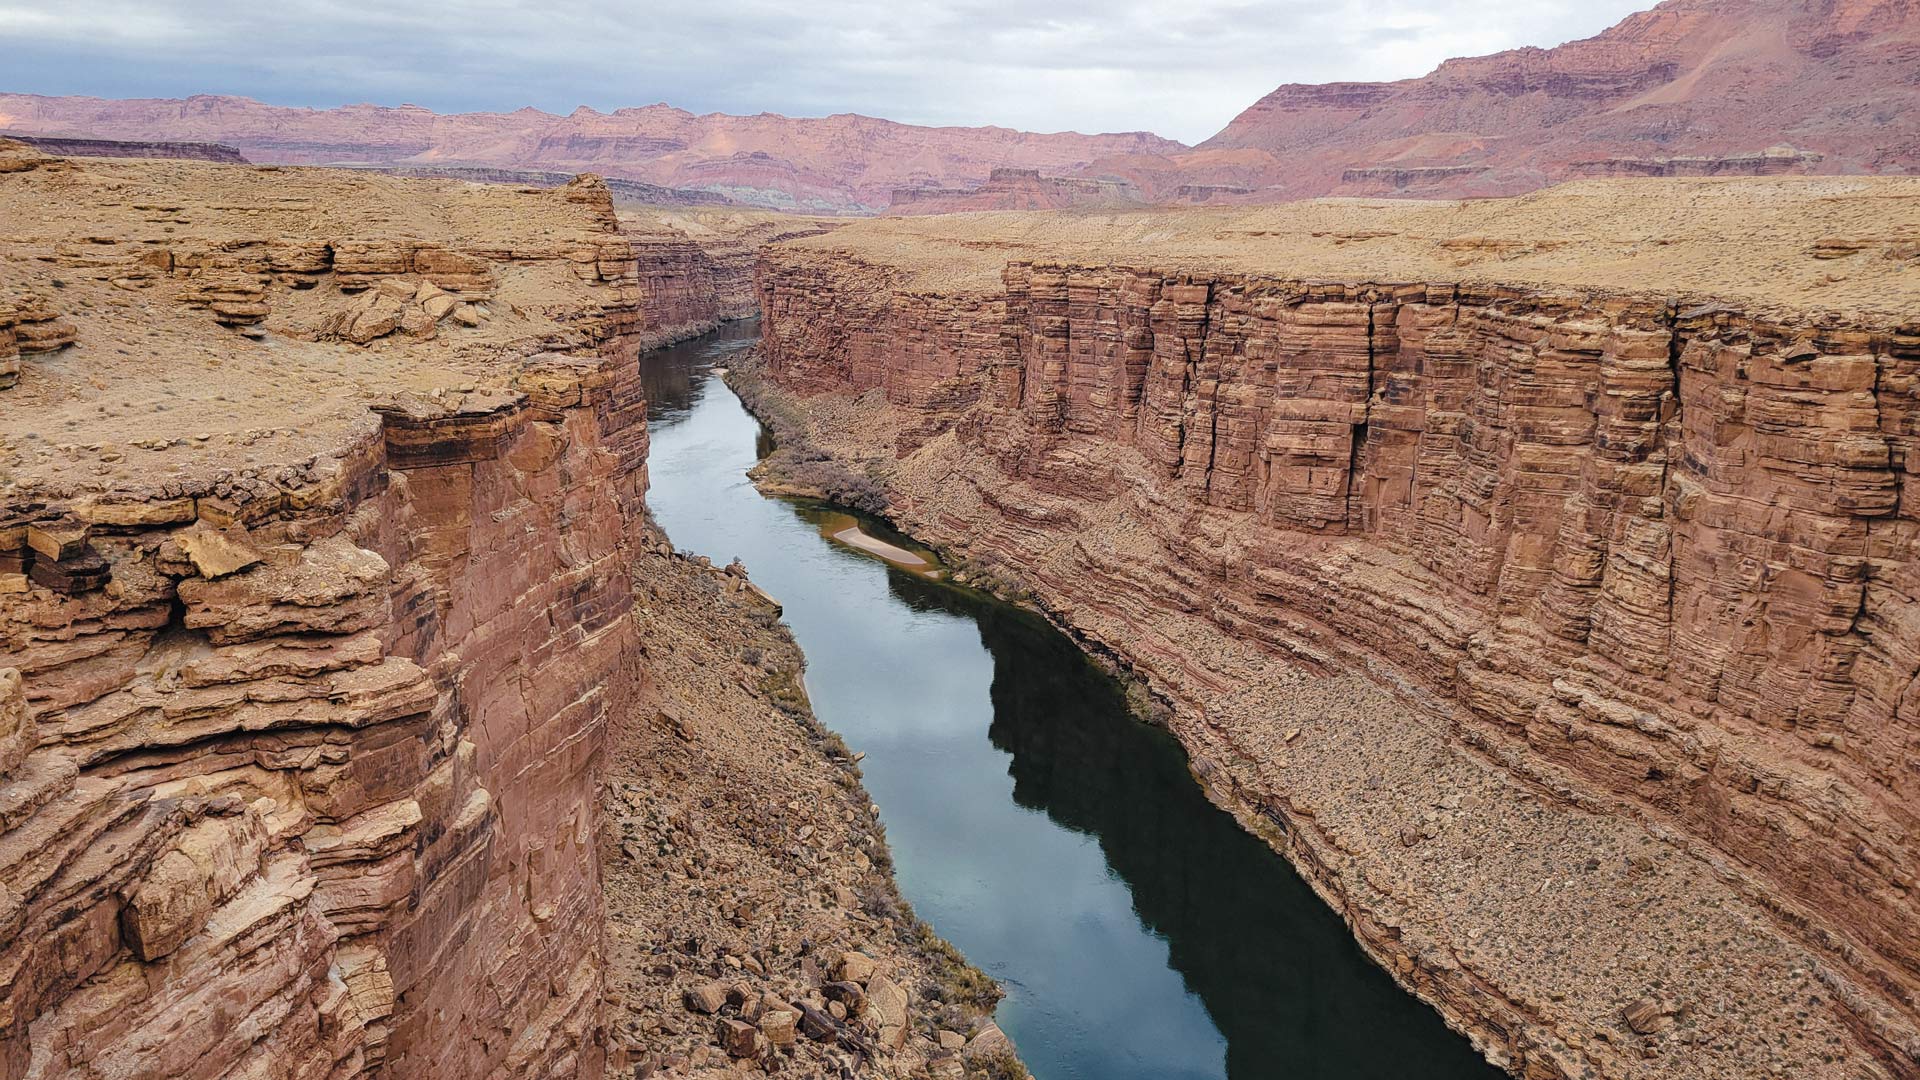 The Colorado River, just north of the Navajo Bridge in Northern Arizona.